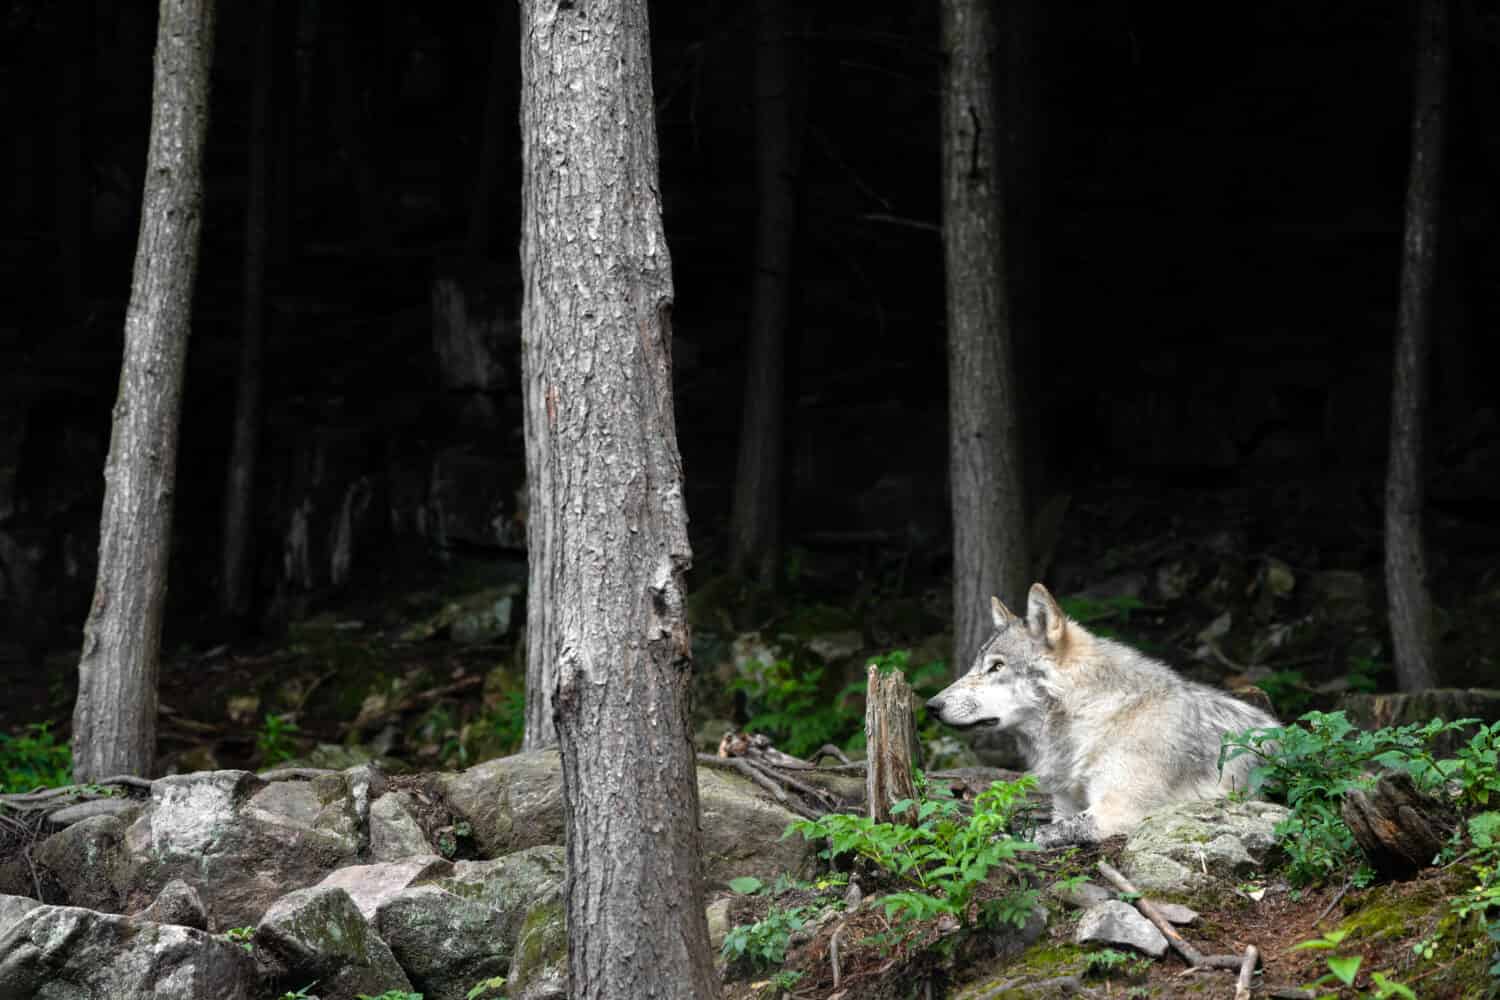 Labrador wolf (Canis lupus labradorius) in its natural environment.